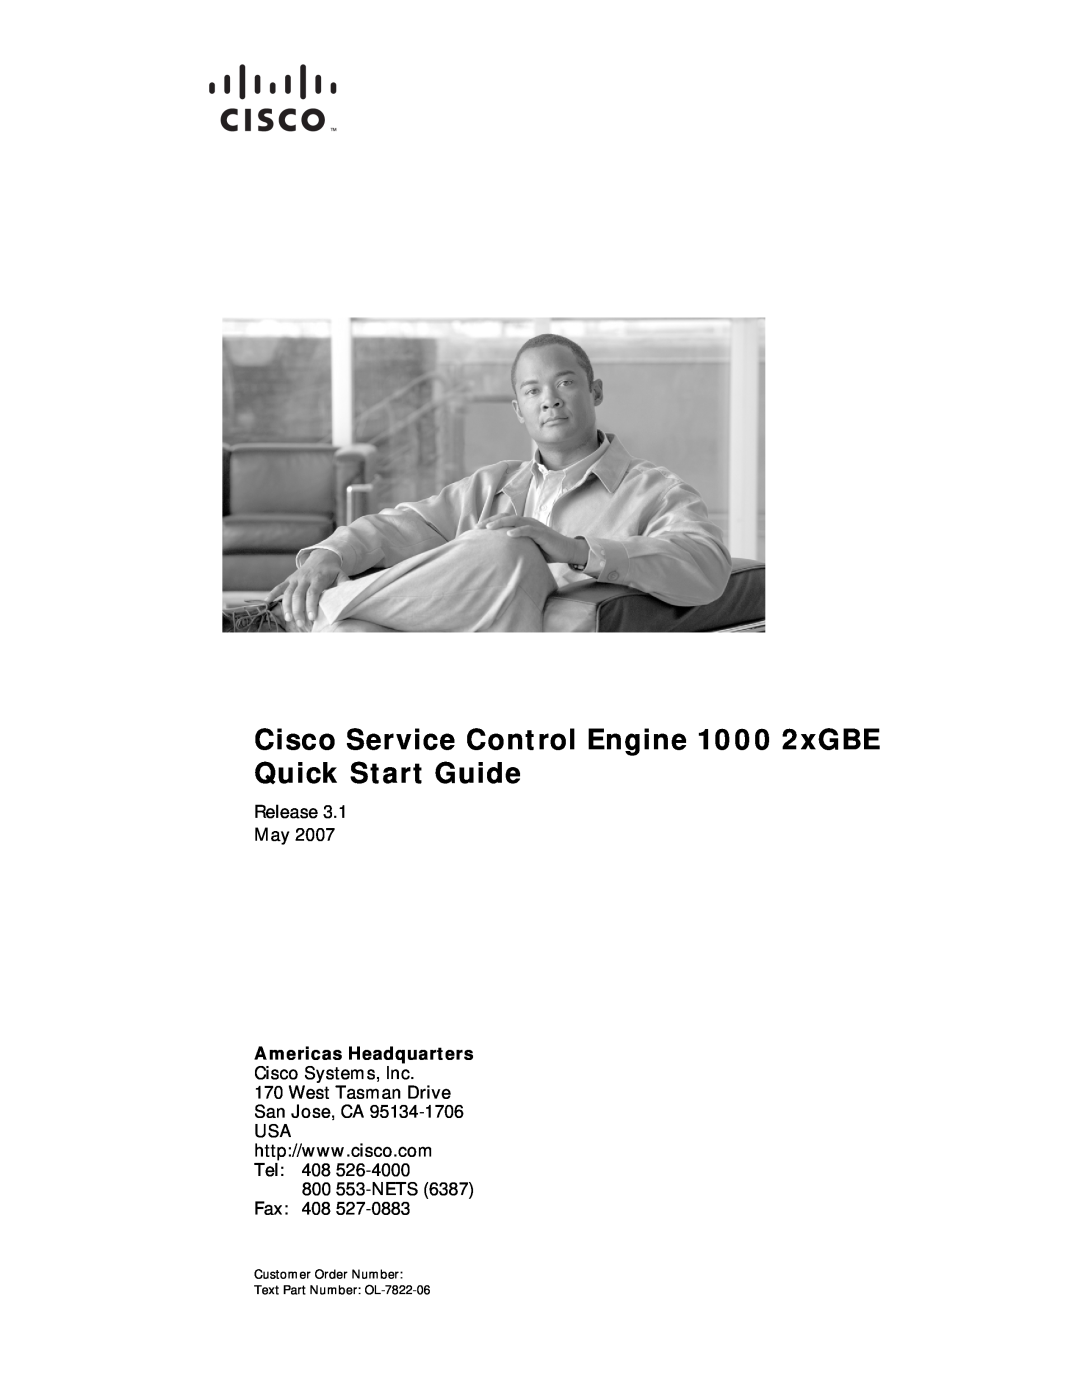 Cisco Systems OL-7822-06 quick start Americas Headquarters, Cisco Service Control Engine 1000 2xGBE Quick Start Guide 